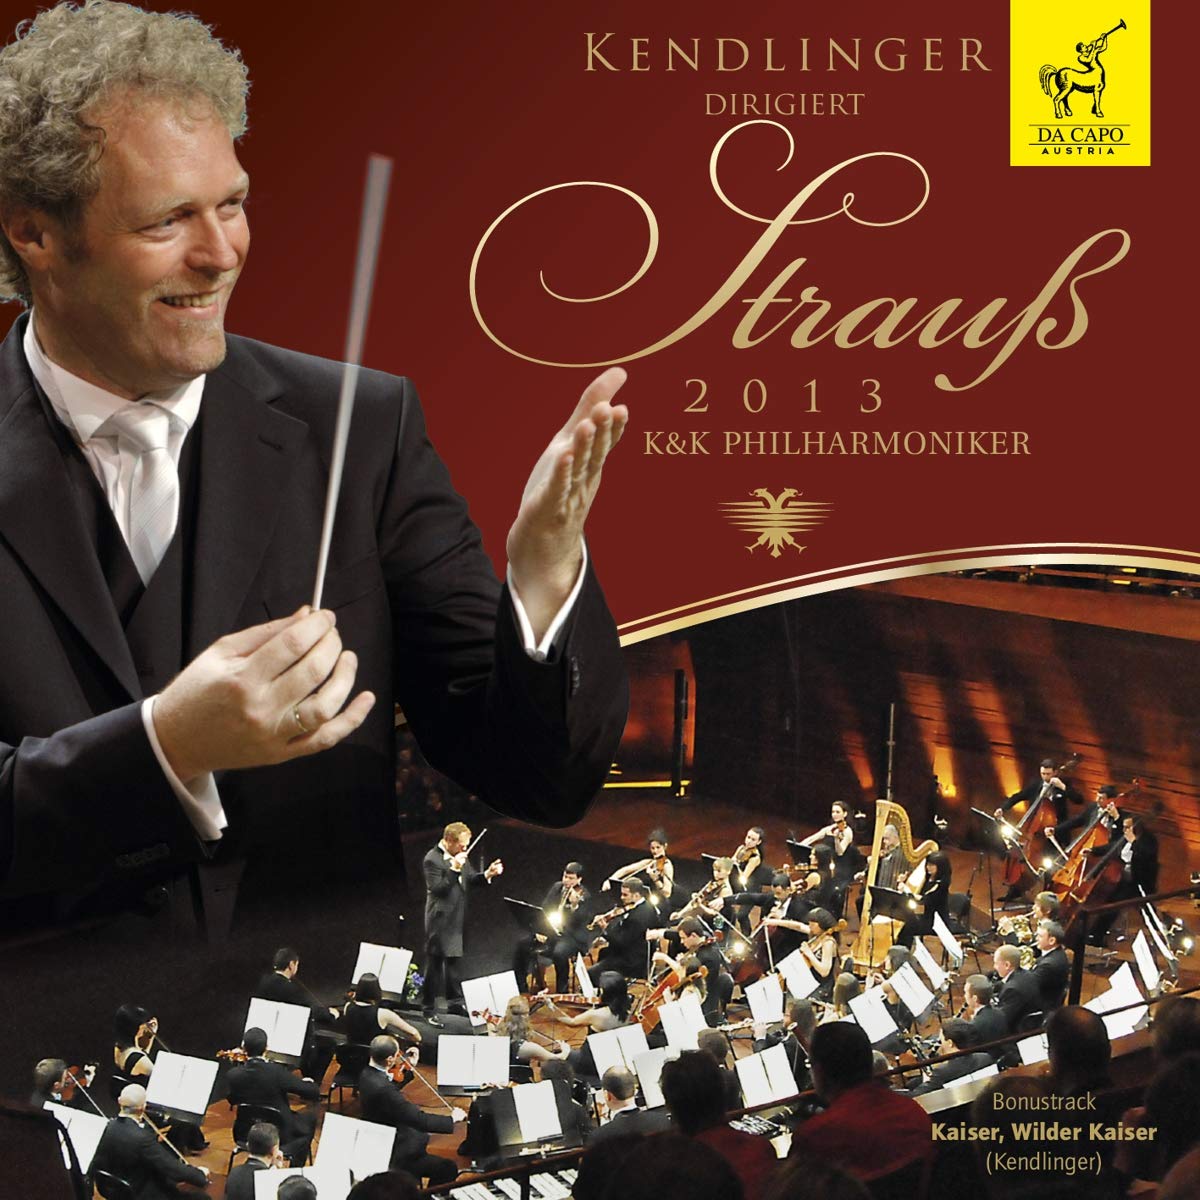 K & K Philharmoniker, Matthias Georg Kendlinger – Kendlinger dirigiert Strauß 2013 (2013) MCH SACD ISO + Hi-Res FLAC